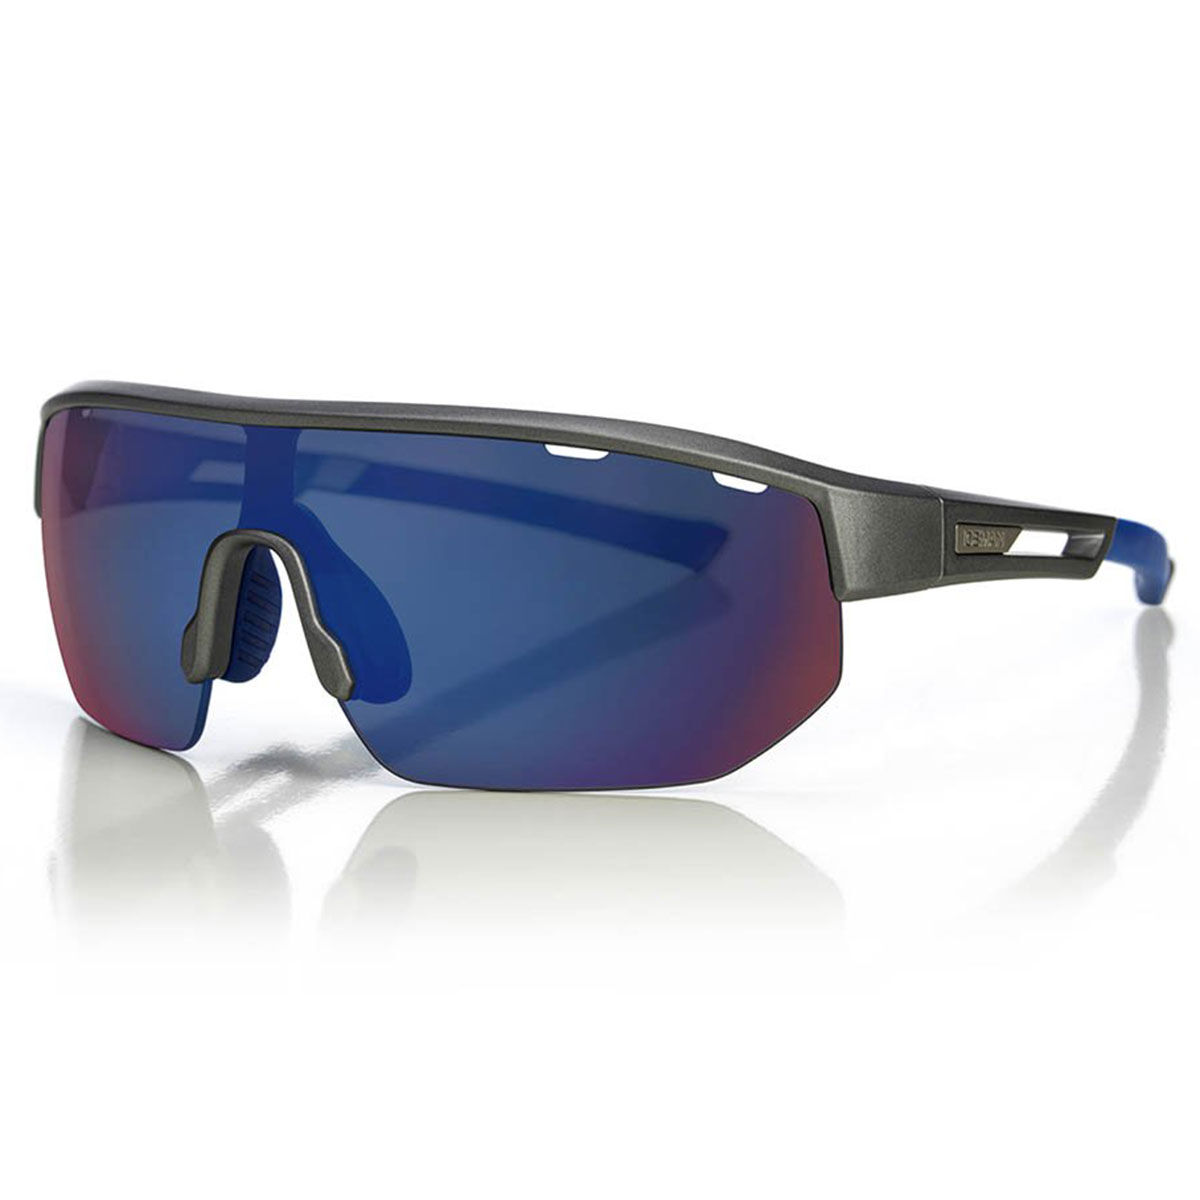 Henrik Stenson Eyewear Iceman 3.0 Golf Sunglasses, Mens, Grey/blue/smoke/blue mirror, One Size | American Golf